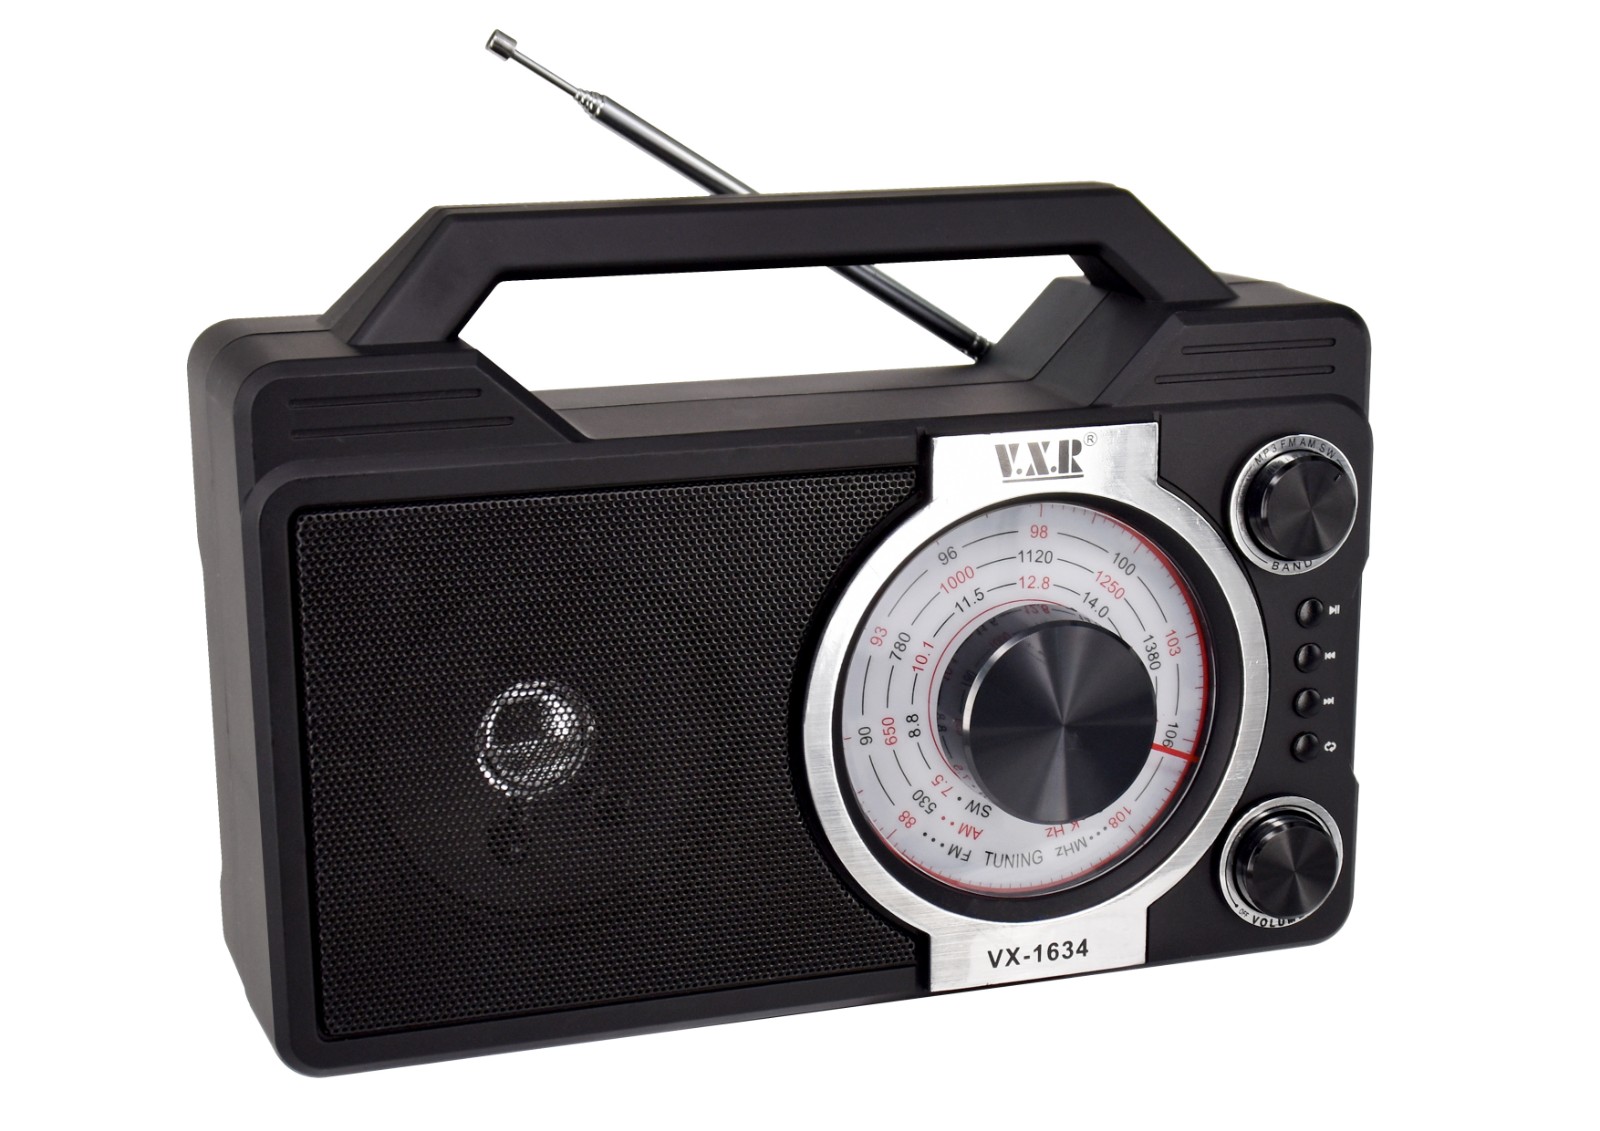 Multifunction Radio, Bluetooth Radio, Portable Radio